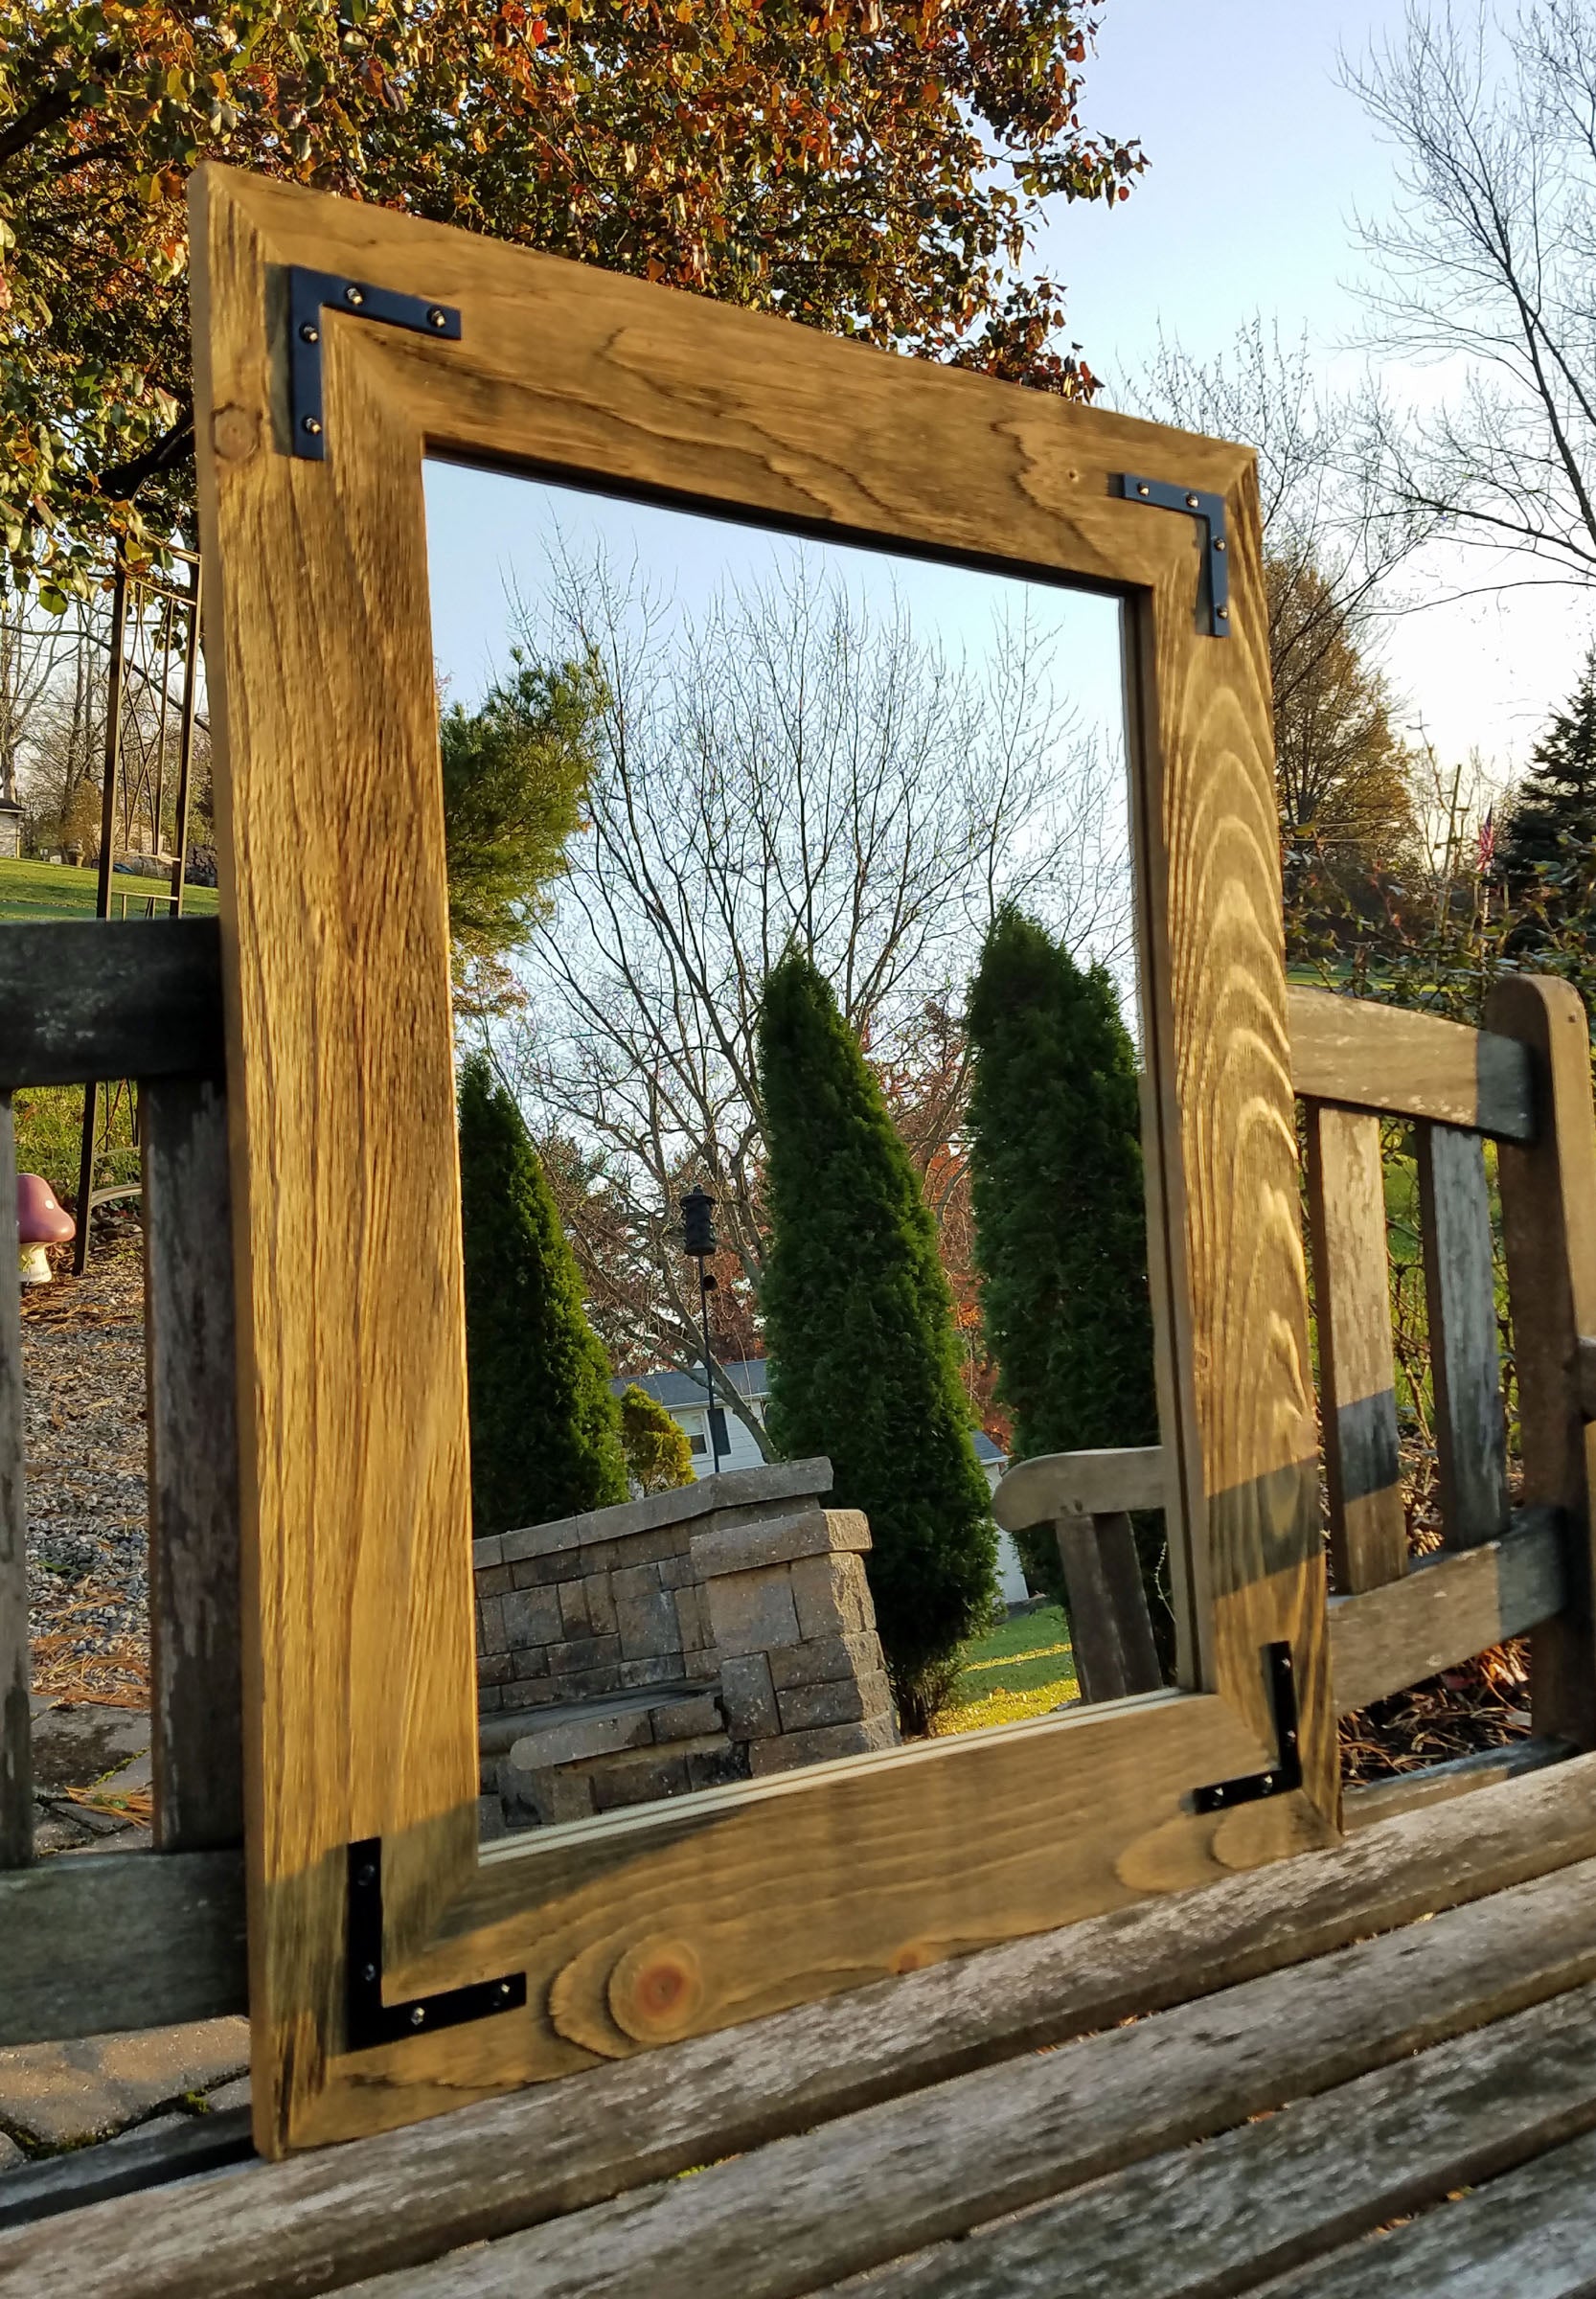 Rustic Frame - 24x30 distressed barn wood frame, metal corner brackets